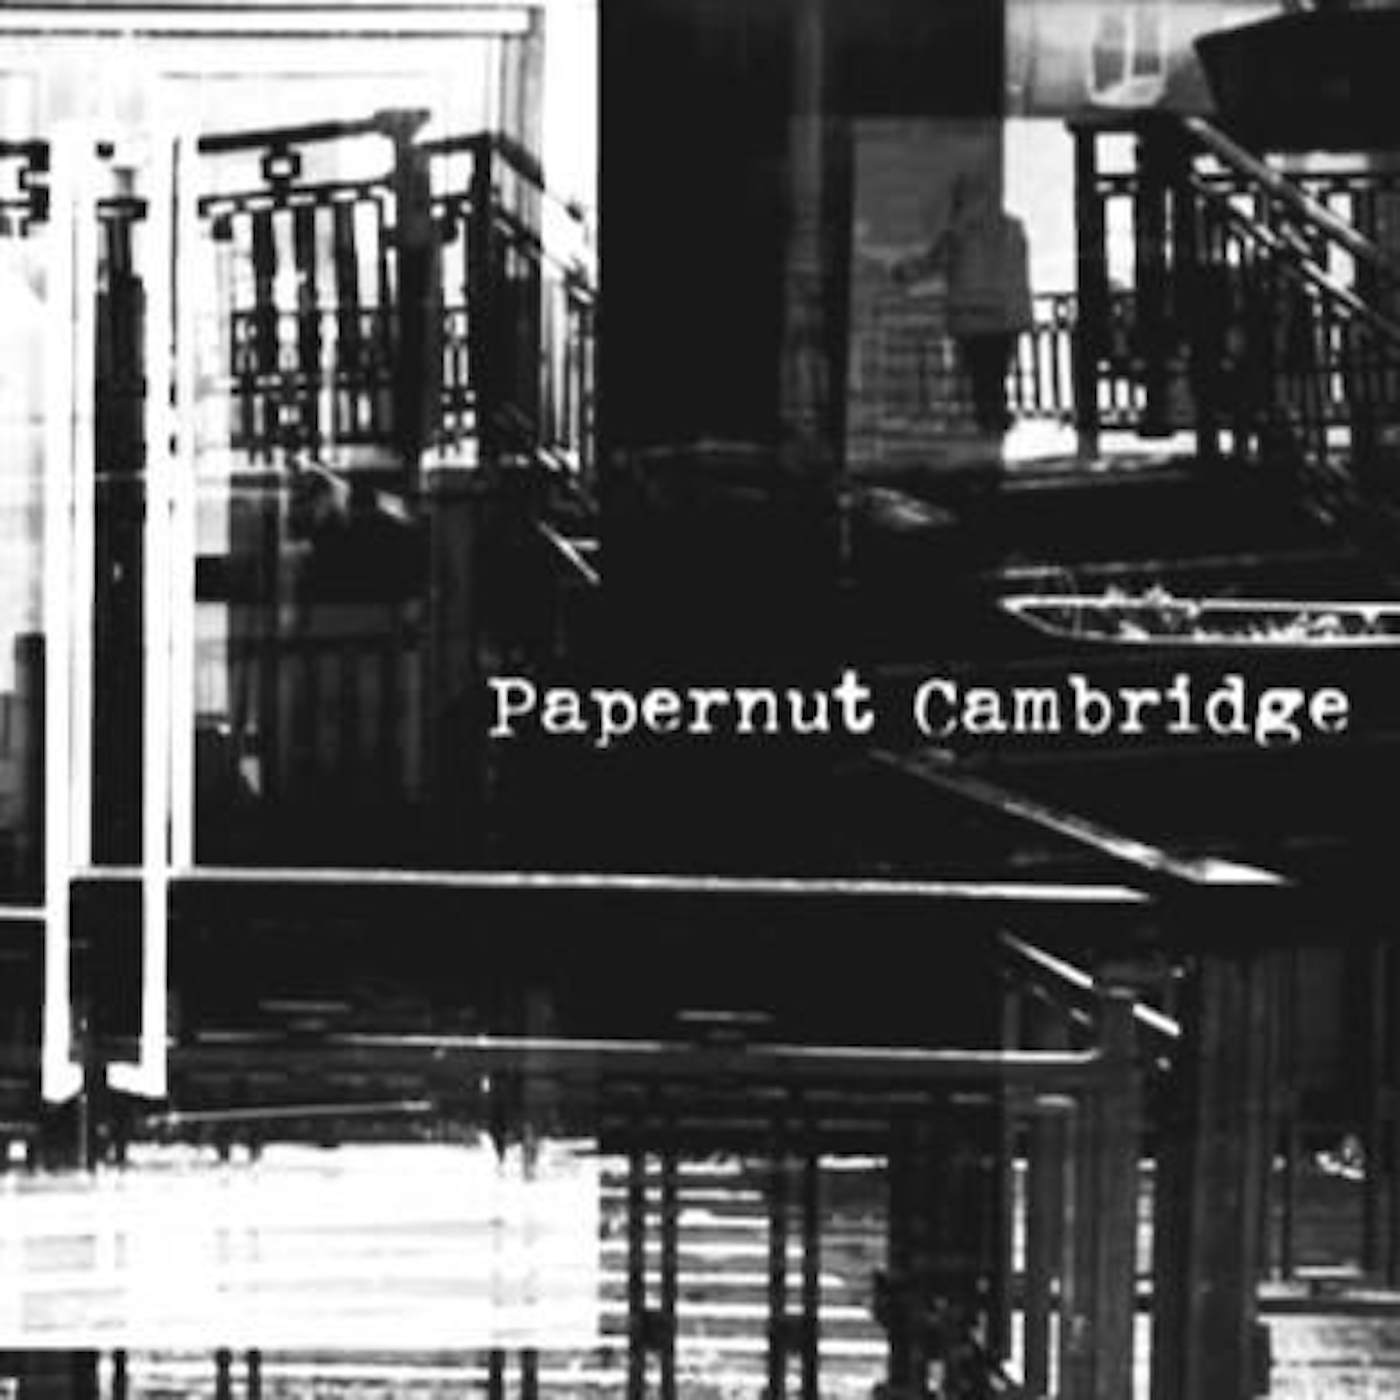 Papernut Cambridge